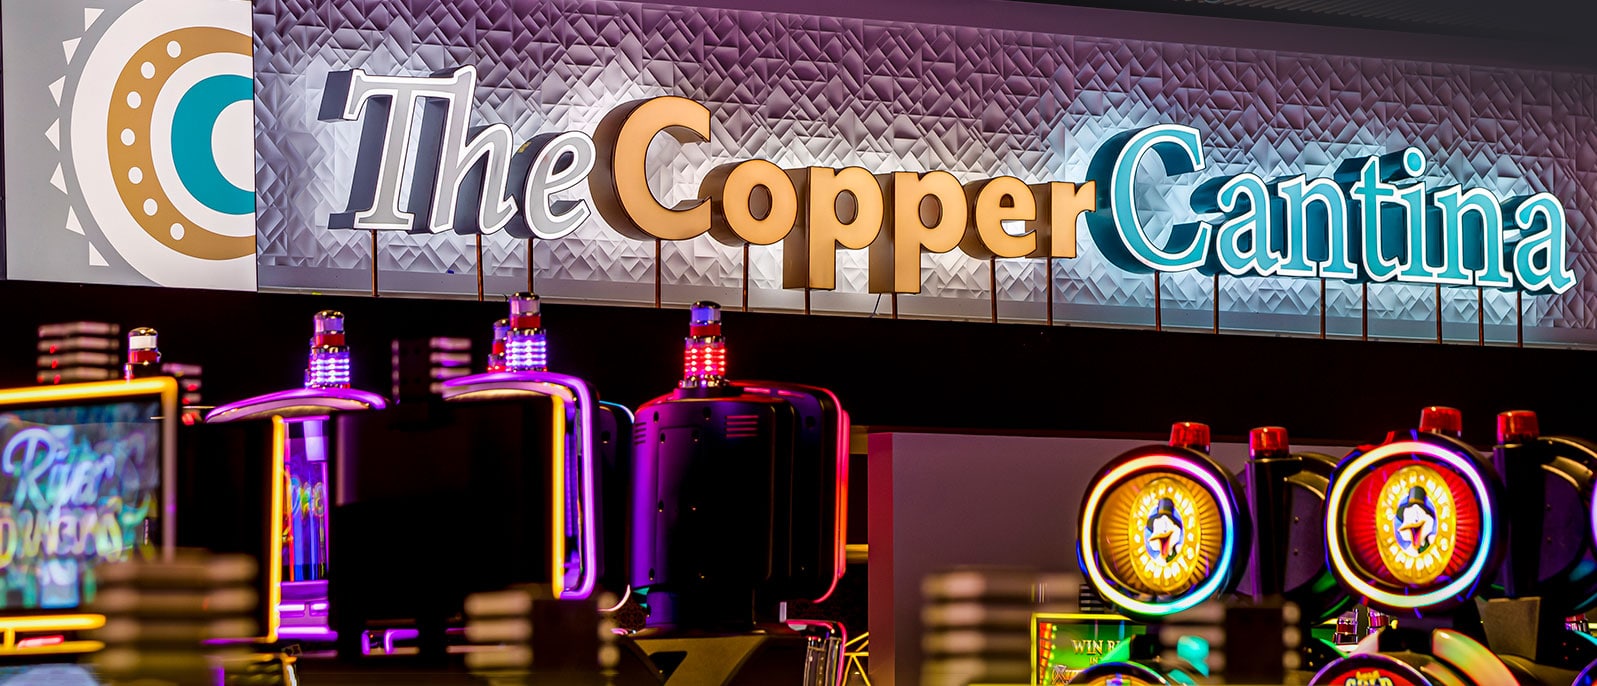 The Copper Cantina sign from Guymon, Oklahoma casino.